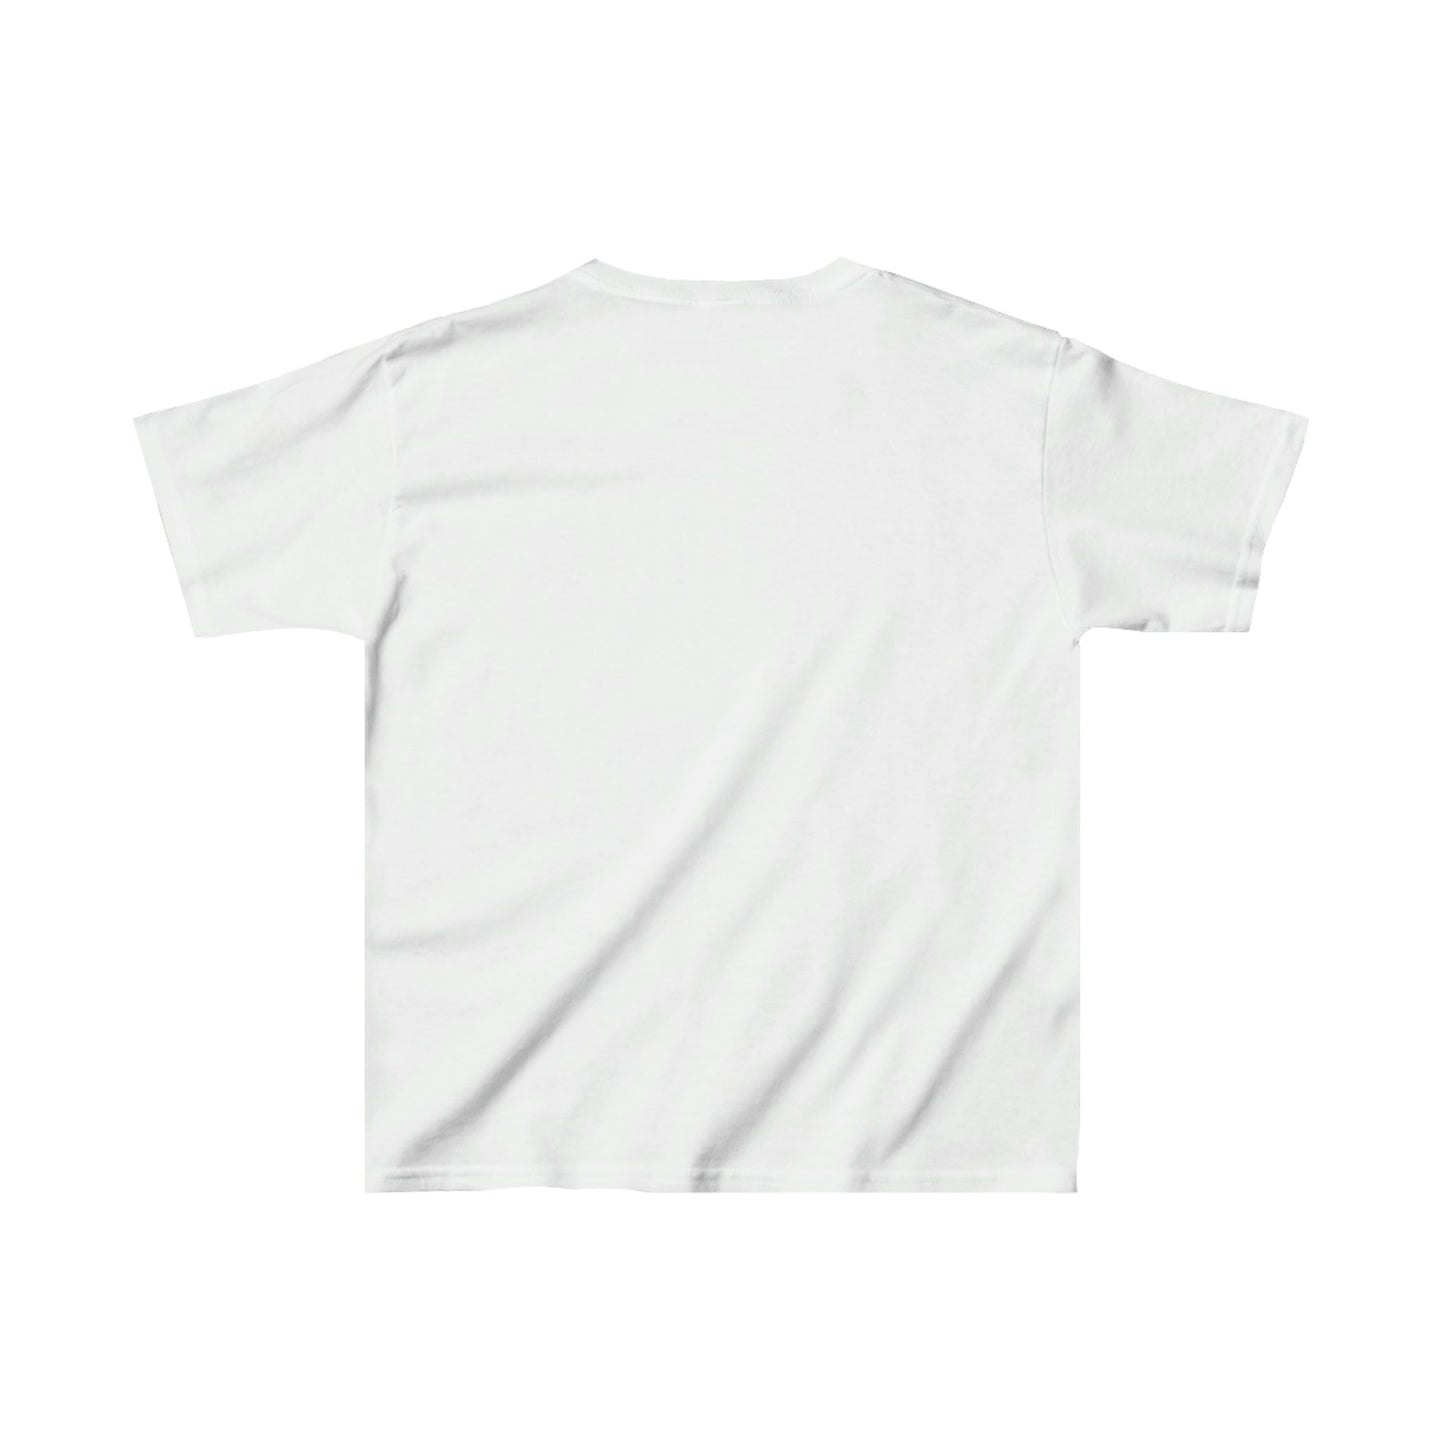 Kids Freedom Rainbow Short Sleeve Cotton T-Shirt - numonet